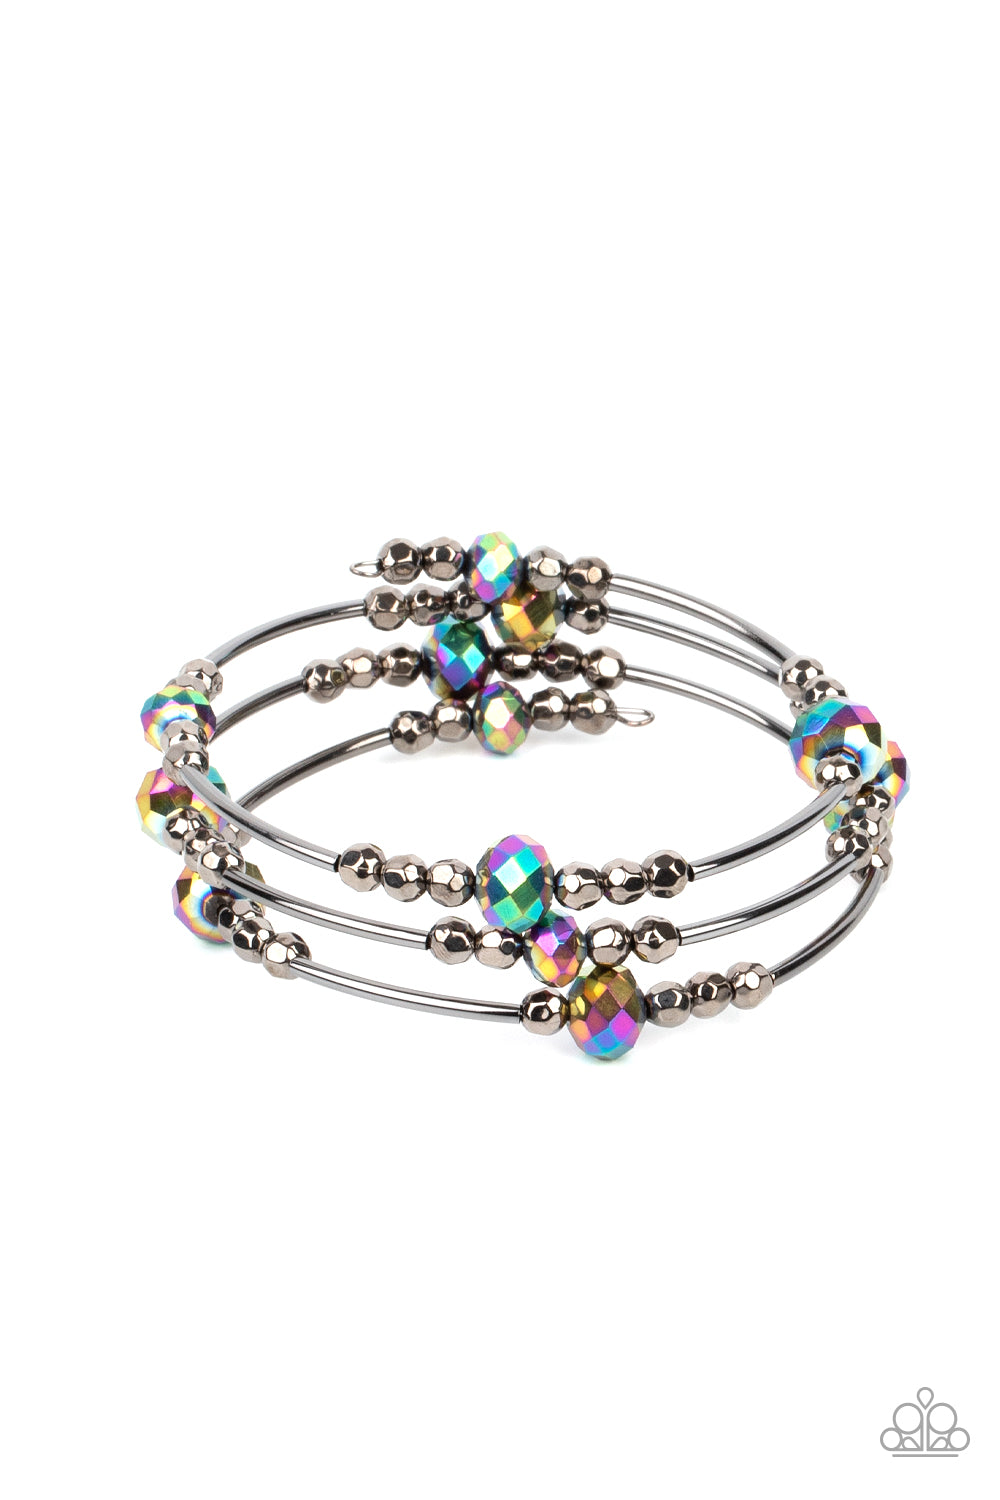 Clip It Bracelet Other - Fashion Jewelry M8119D